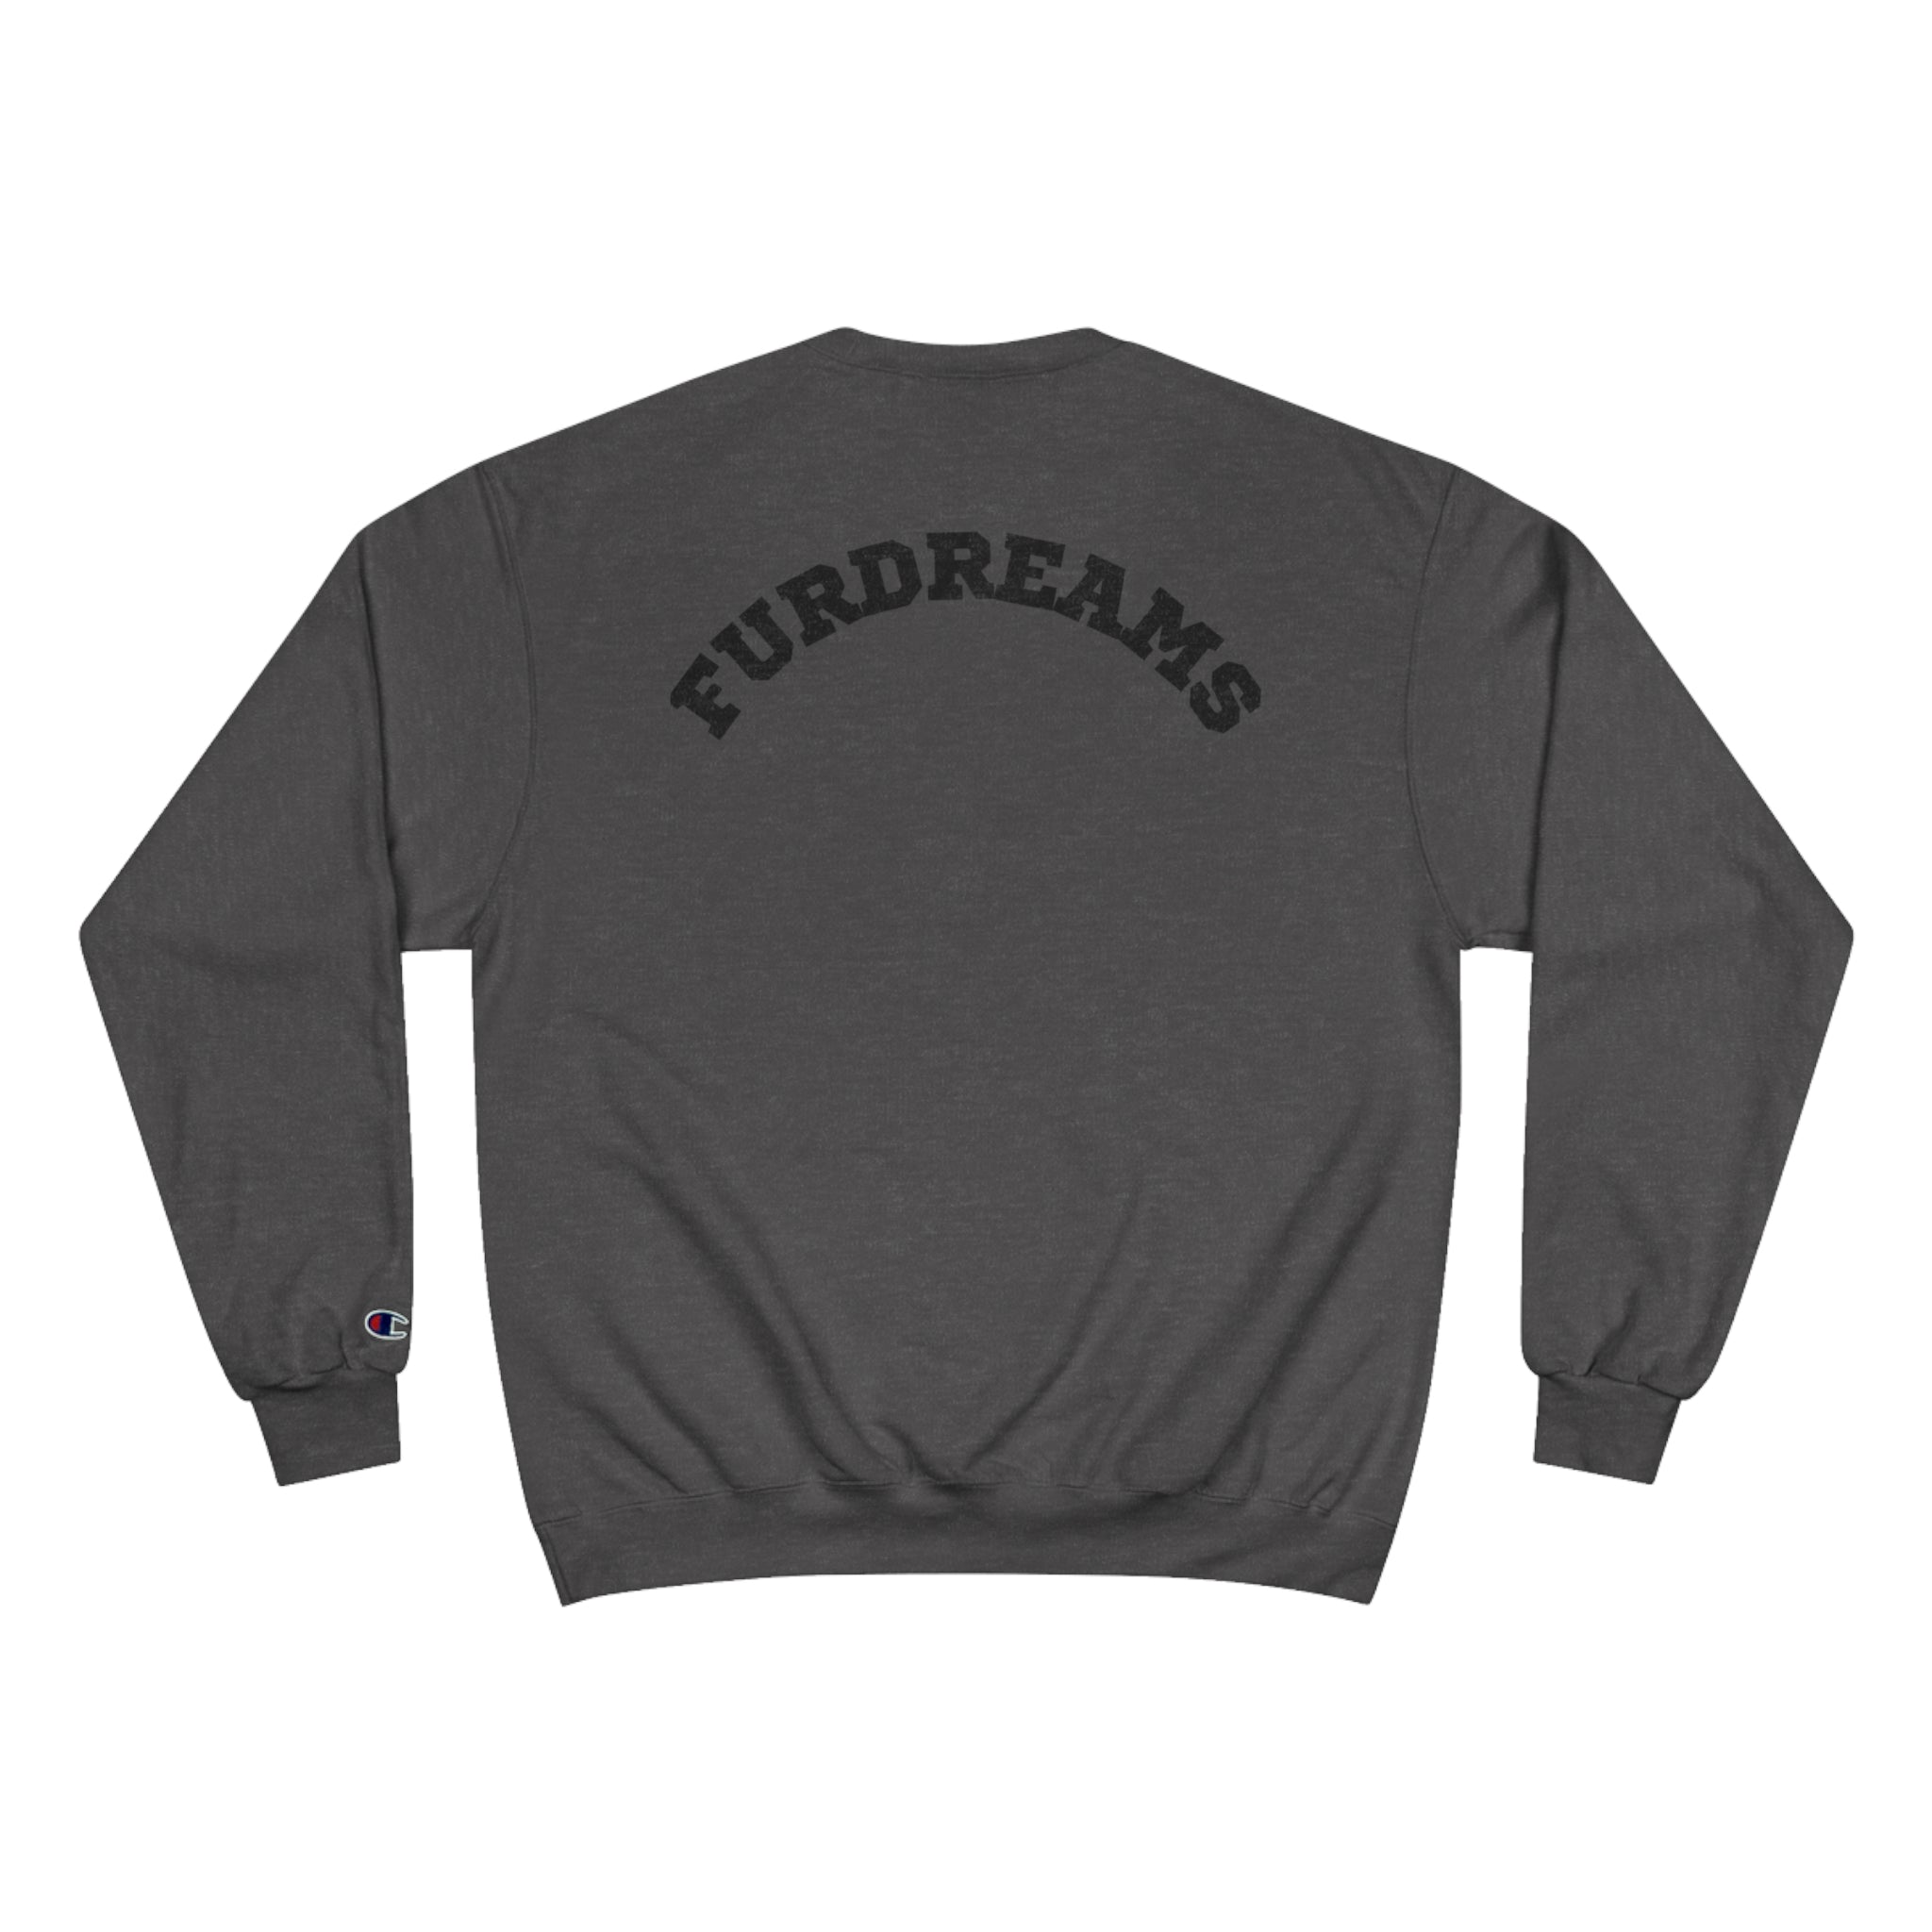 FURDreams “PIT” VI Champion Sweatshirt